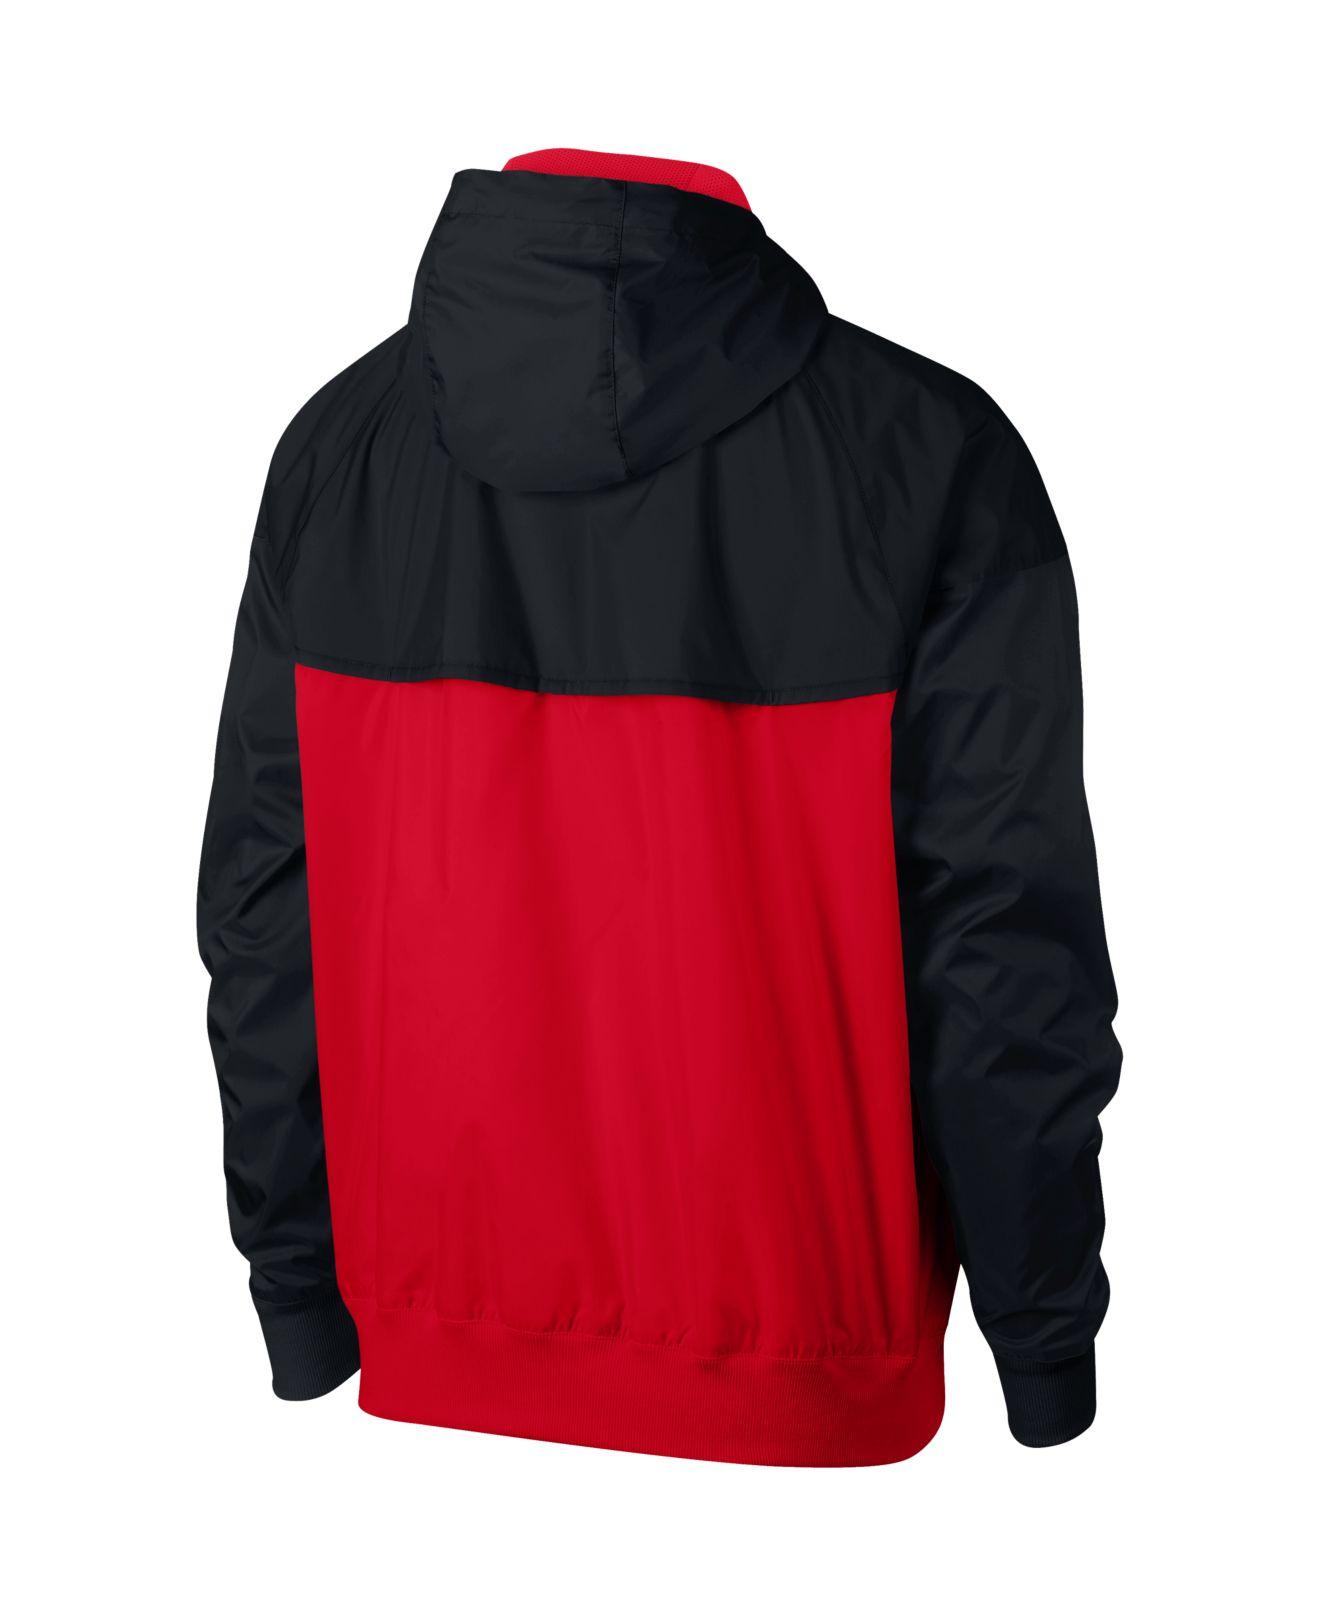 Nike Synthetic Sportswear Windrunner Jacket in Red/Black (Red) for Men -  Lyst